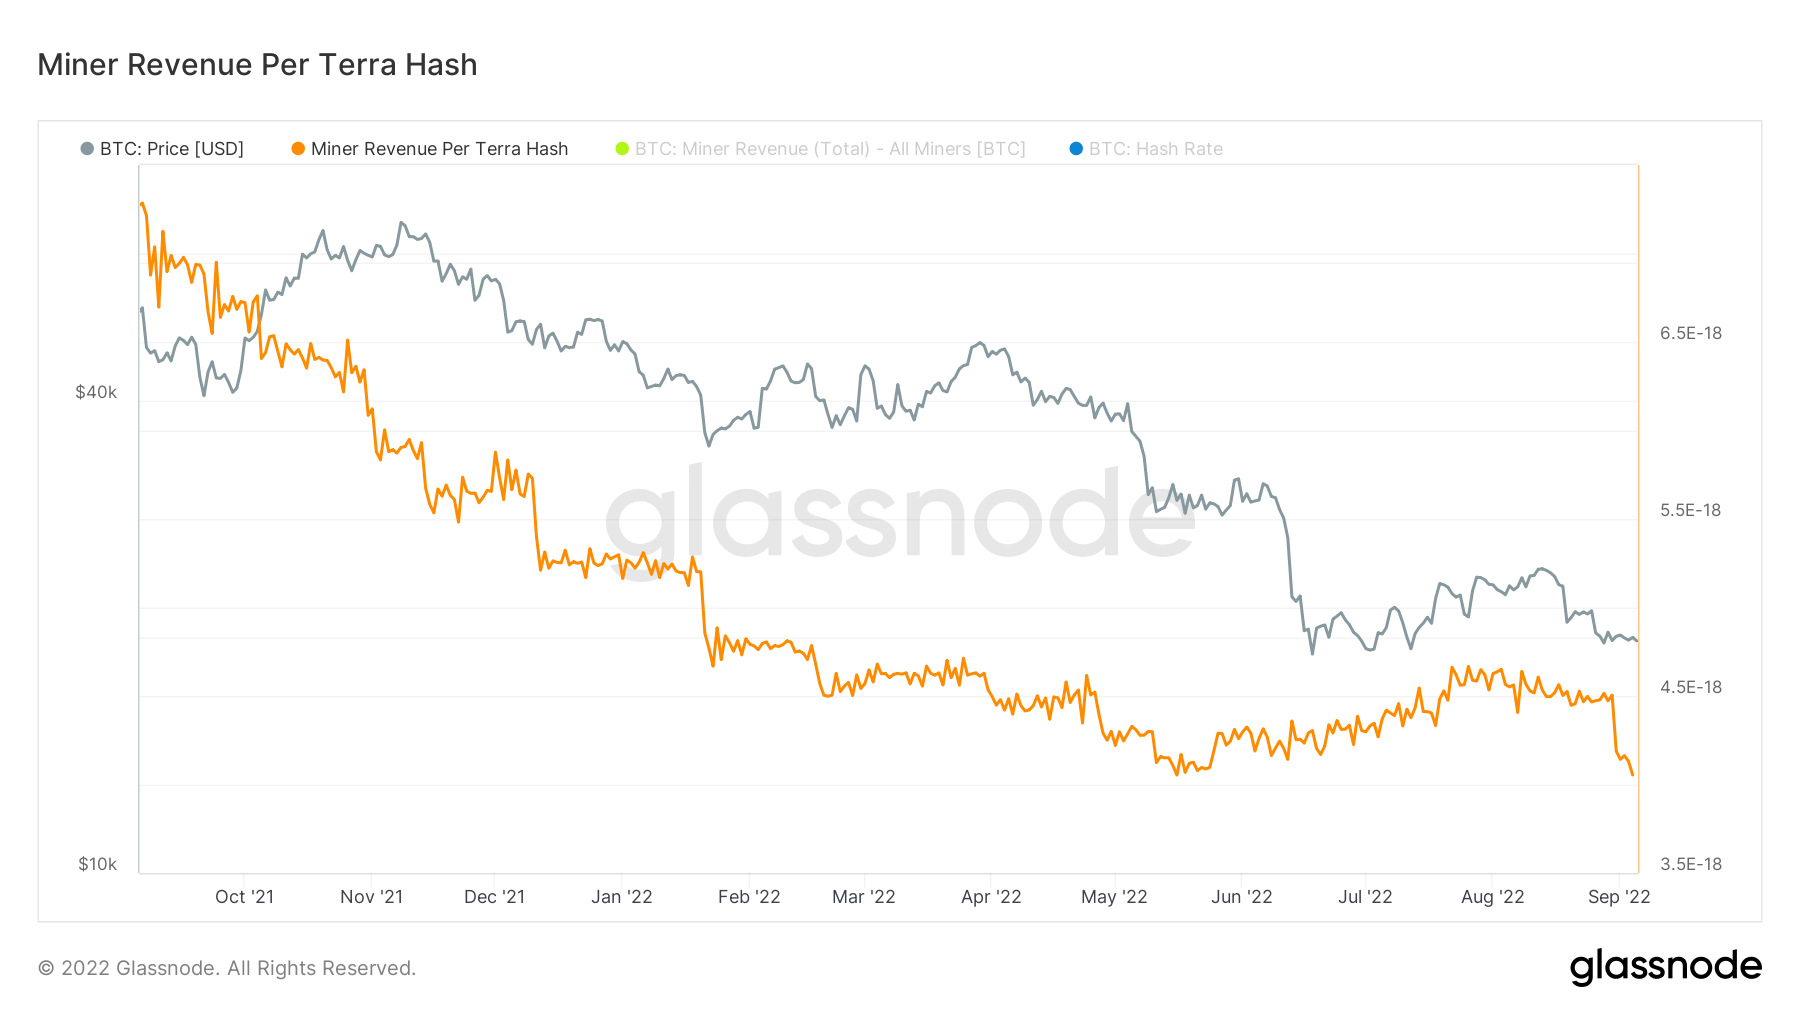 Bitcoin miner revenue per terra hash